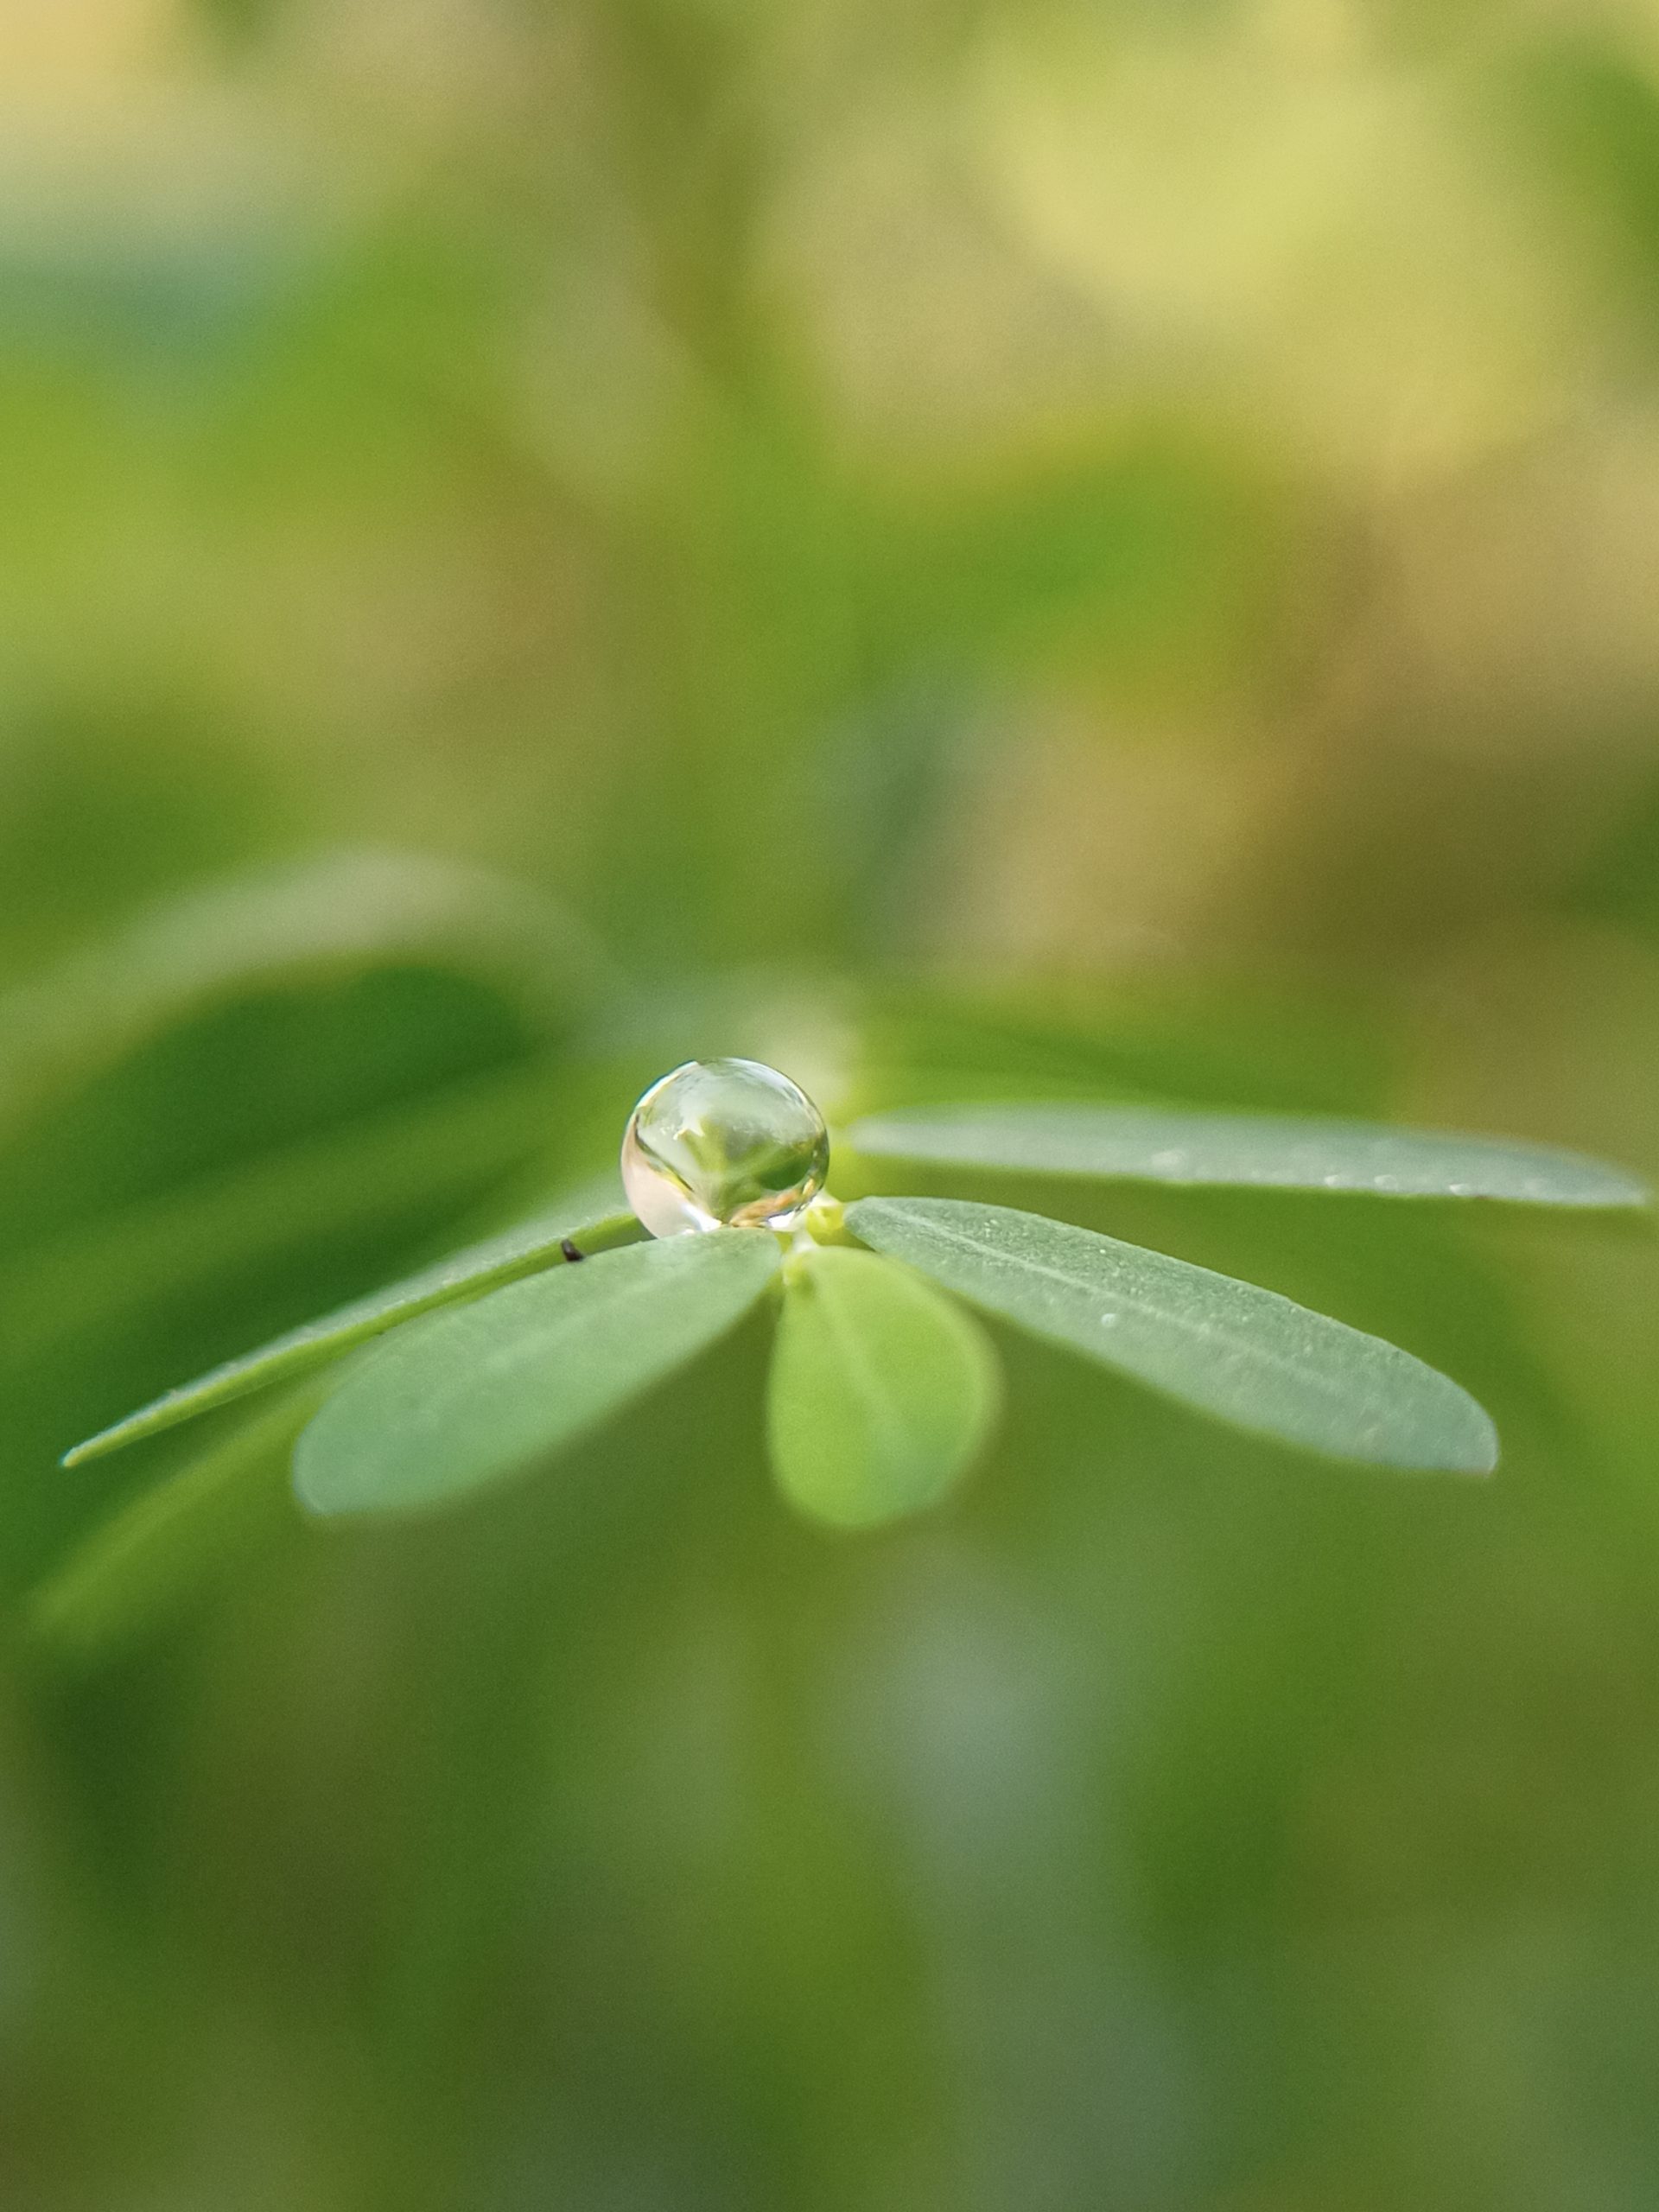 Drops on leaf